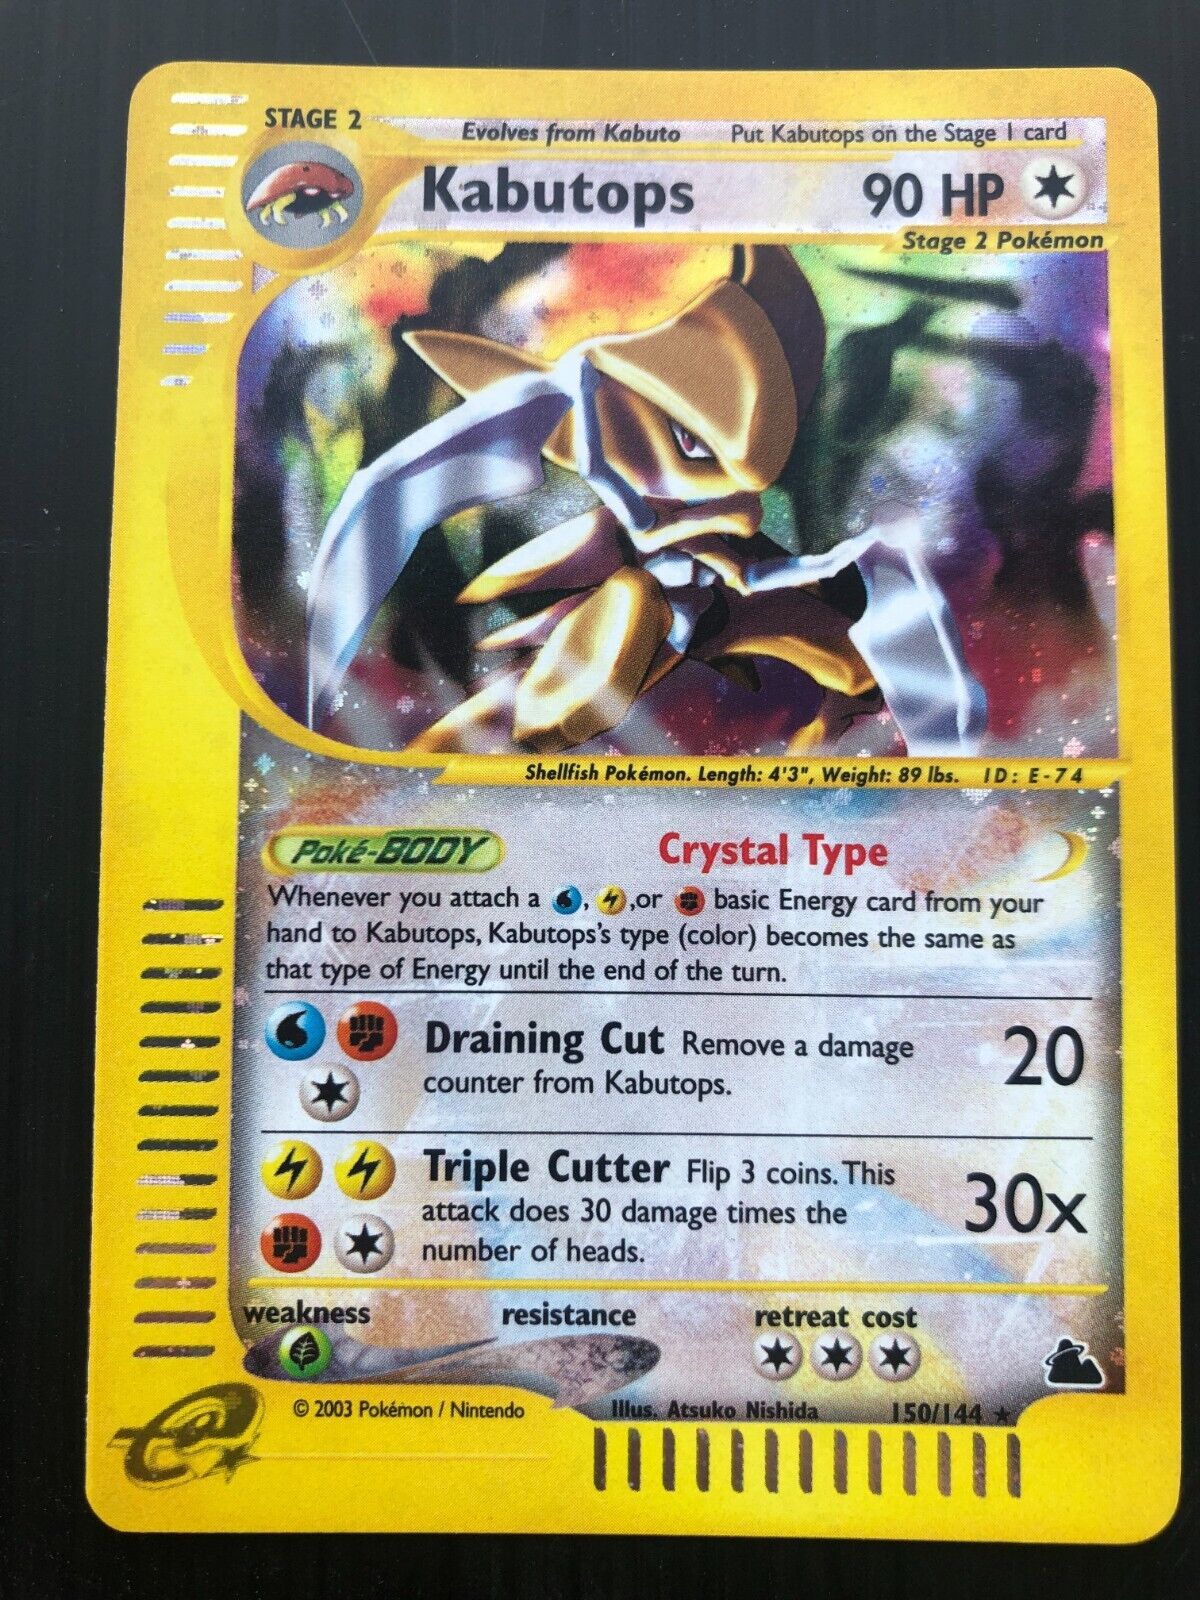 Crystal Kabutops Skyridge 150144 Rare Pokemon Card  Excellent Condition